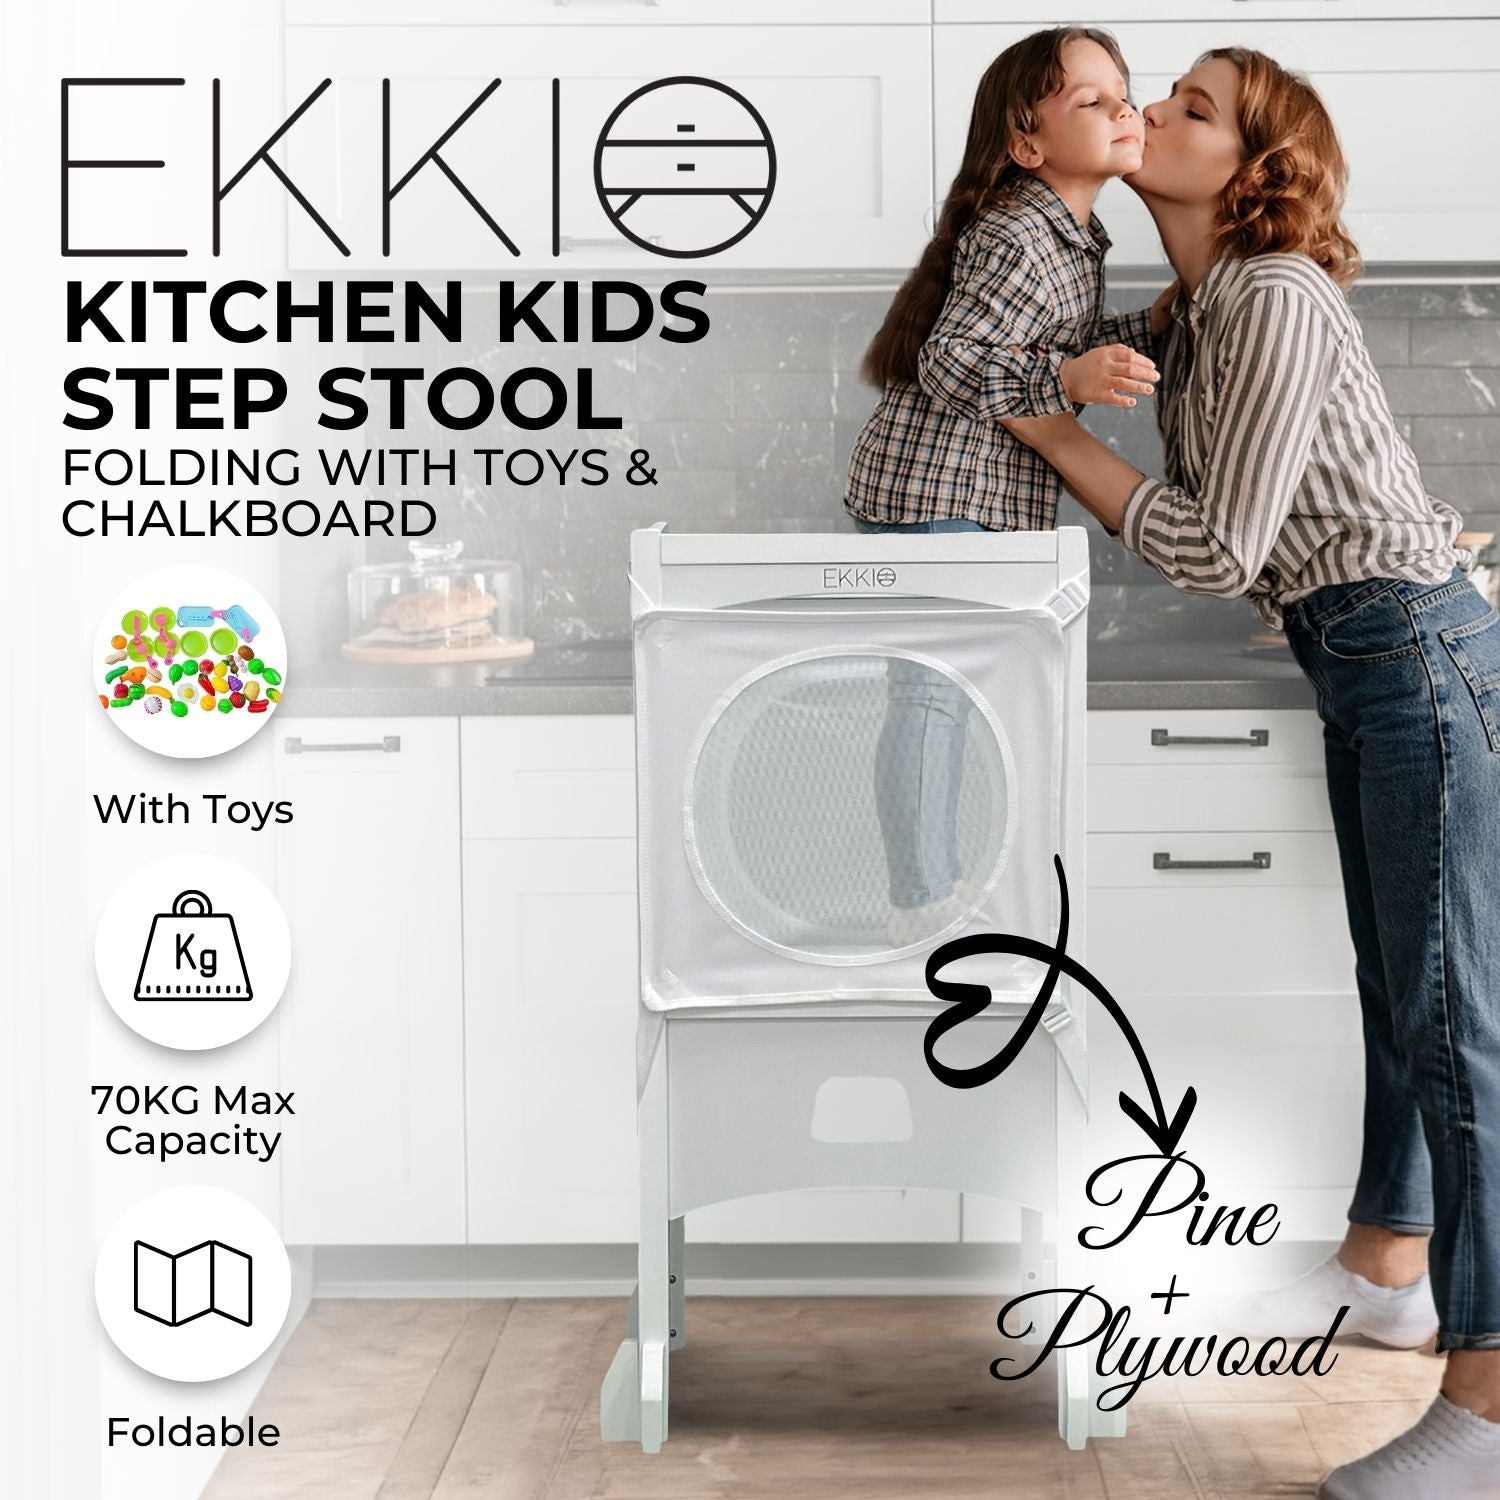 EKKIO Folding Kitchen Kids Step Stool with Chalkboard- Saturn, Moon, Square and Star Shape Design (White) - 0